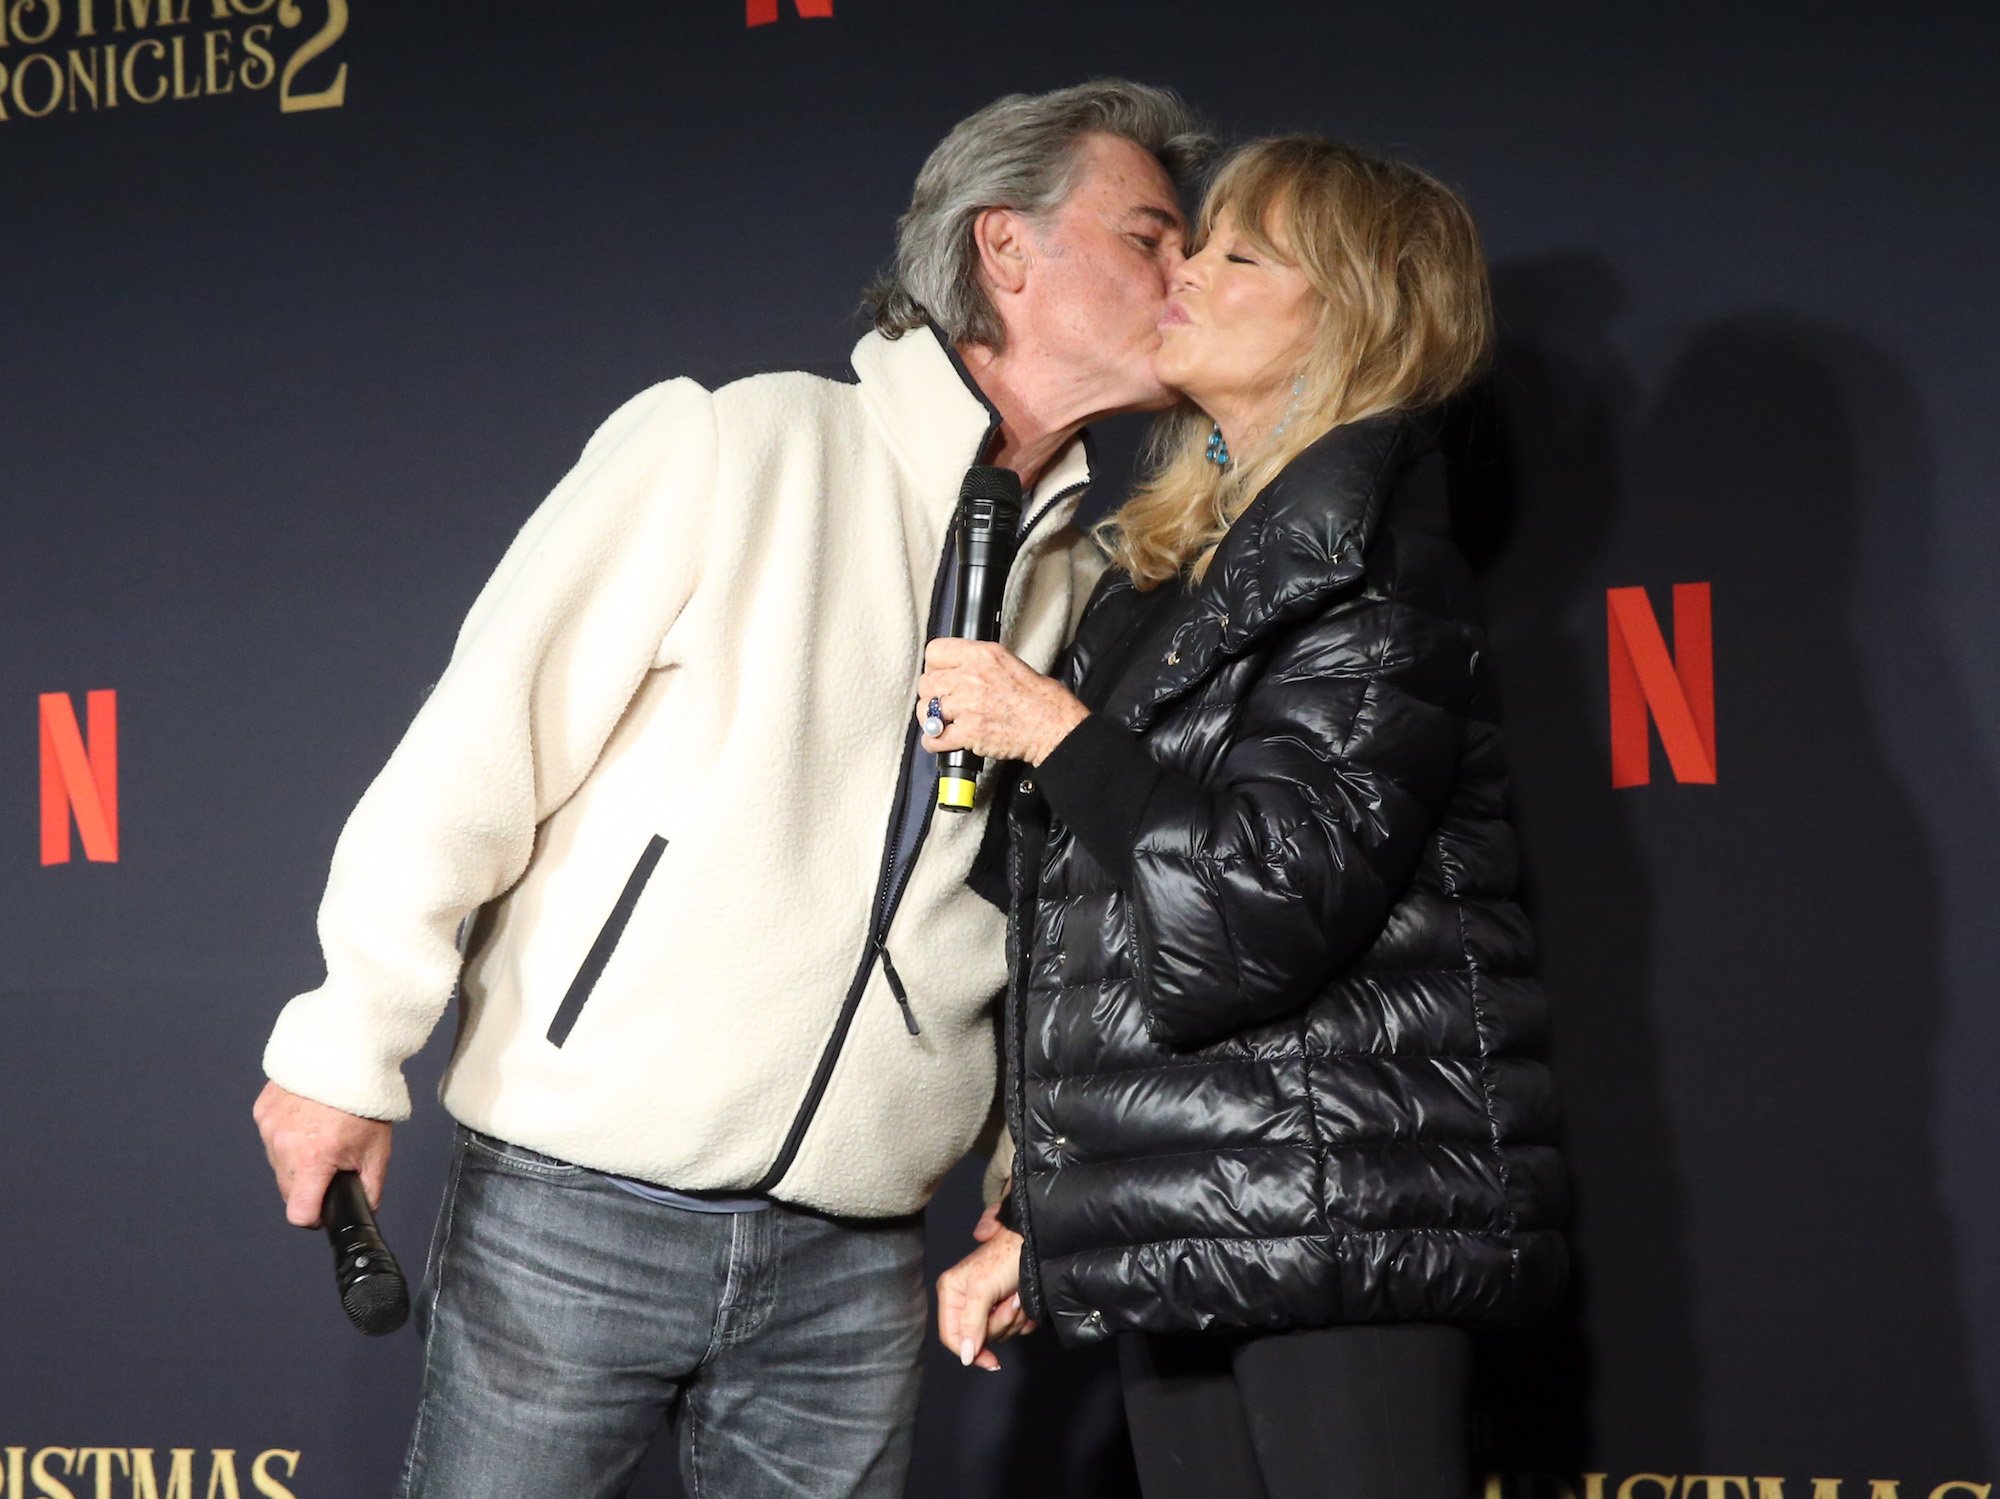 Kurt Russell kisses Goldie Hawn on the cheek